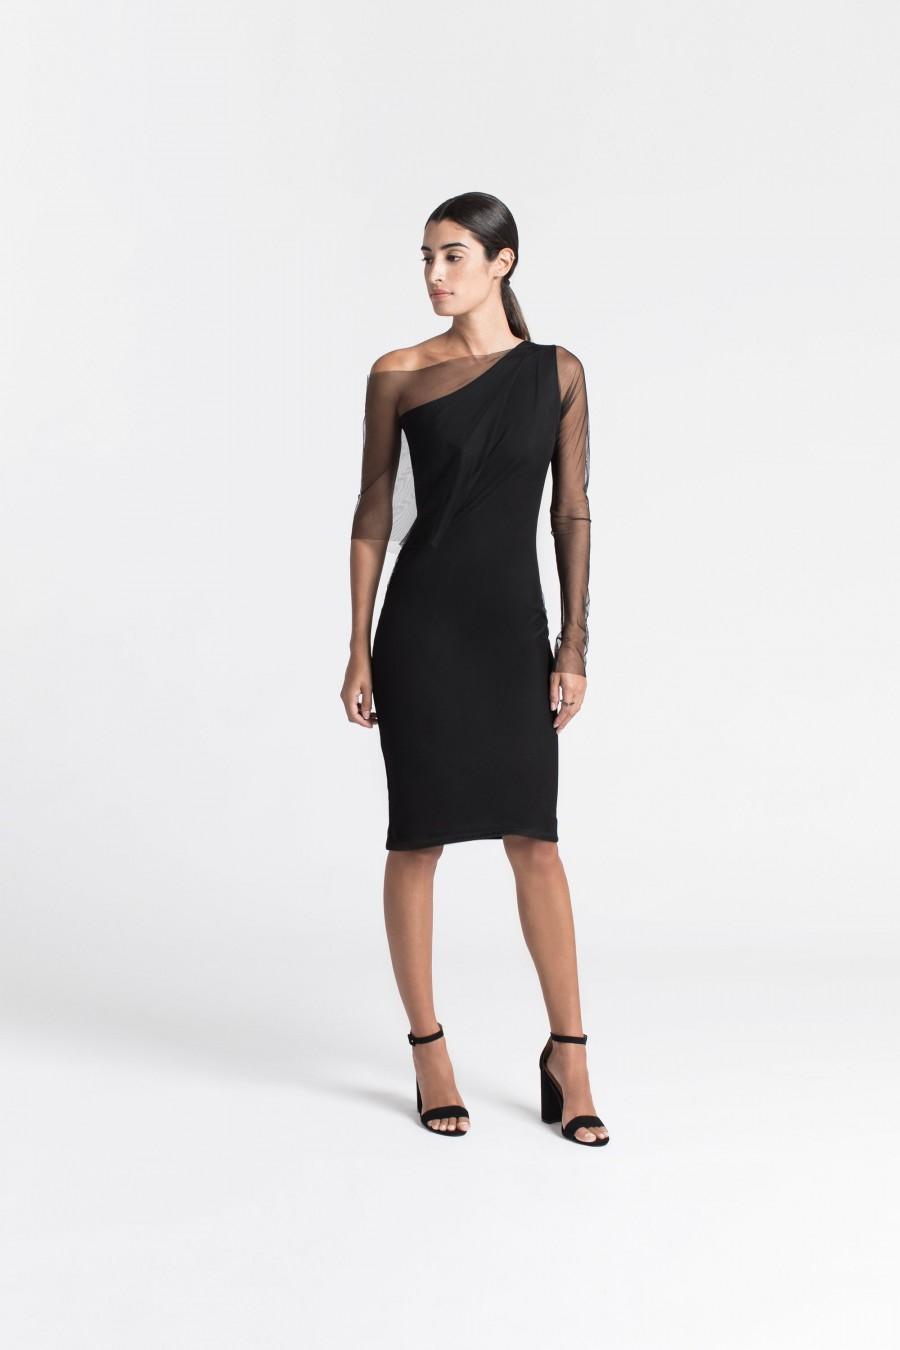 Hochzeit - NEW Pencil Dress / Black Dress / One Shoulder Dress / Party Dress / Cocktail Dress / Scarlett Dress / Marcellamoda - MD1010